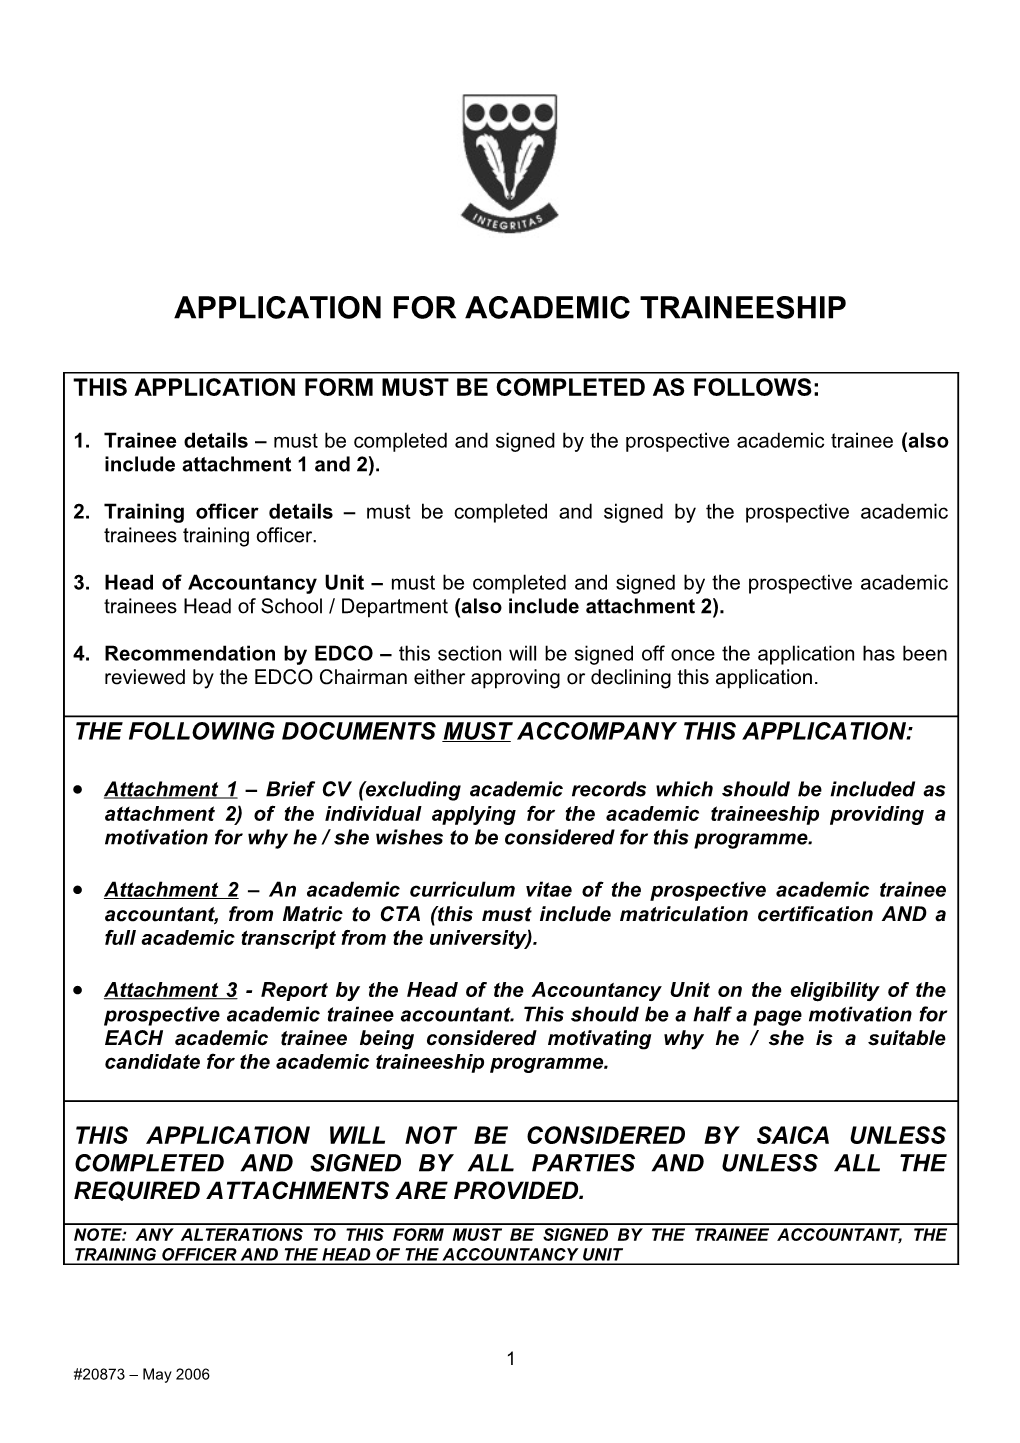 Application for Academic Traineeship